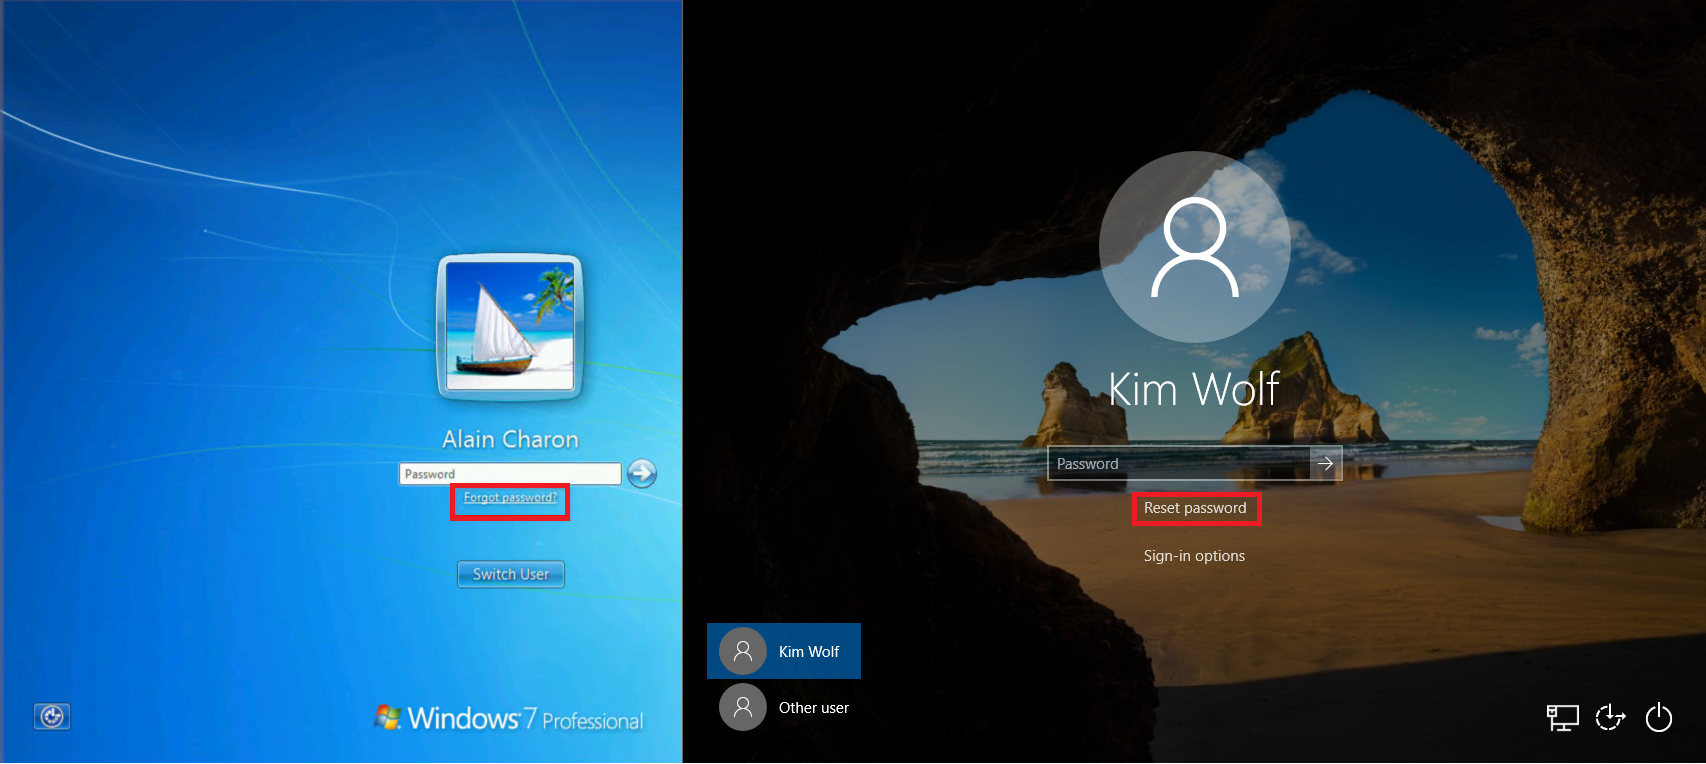 Windows 7 login screen